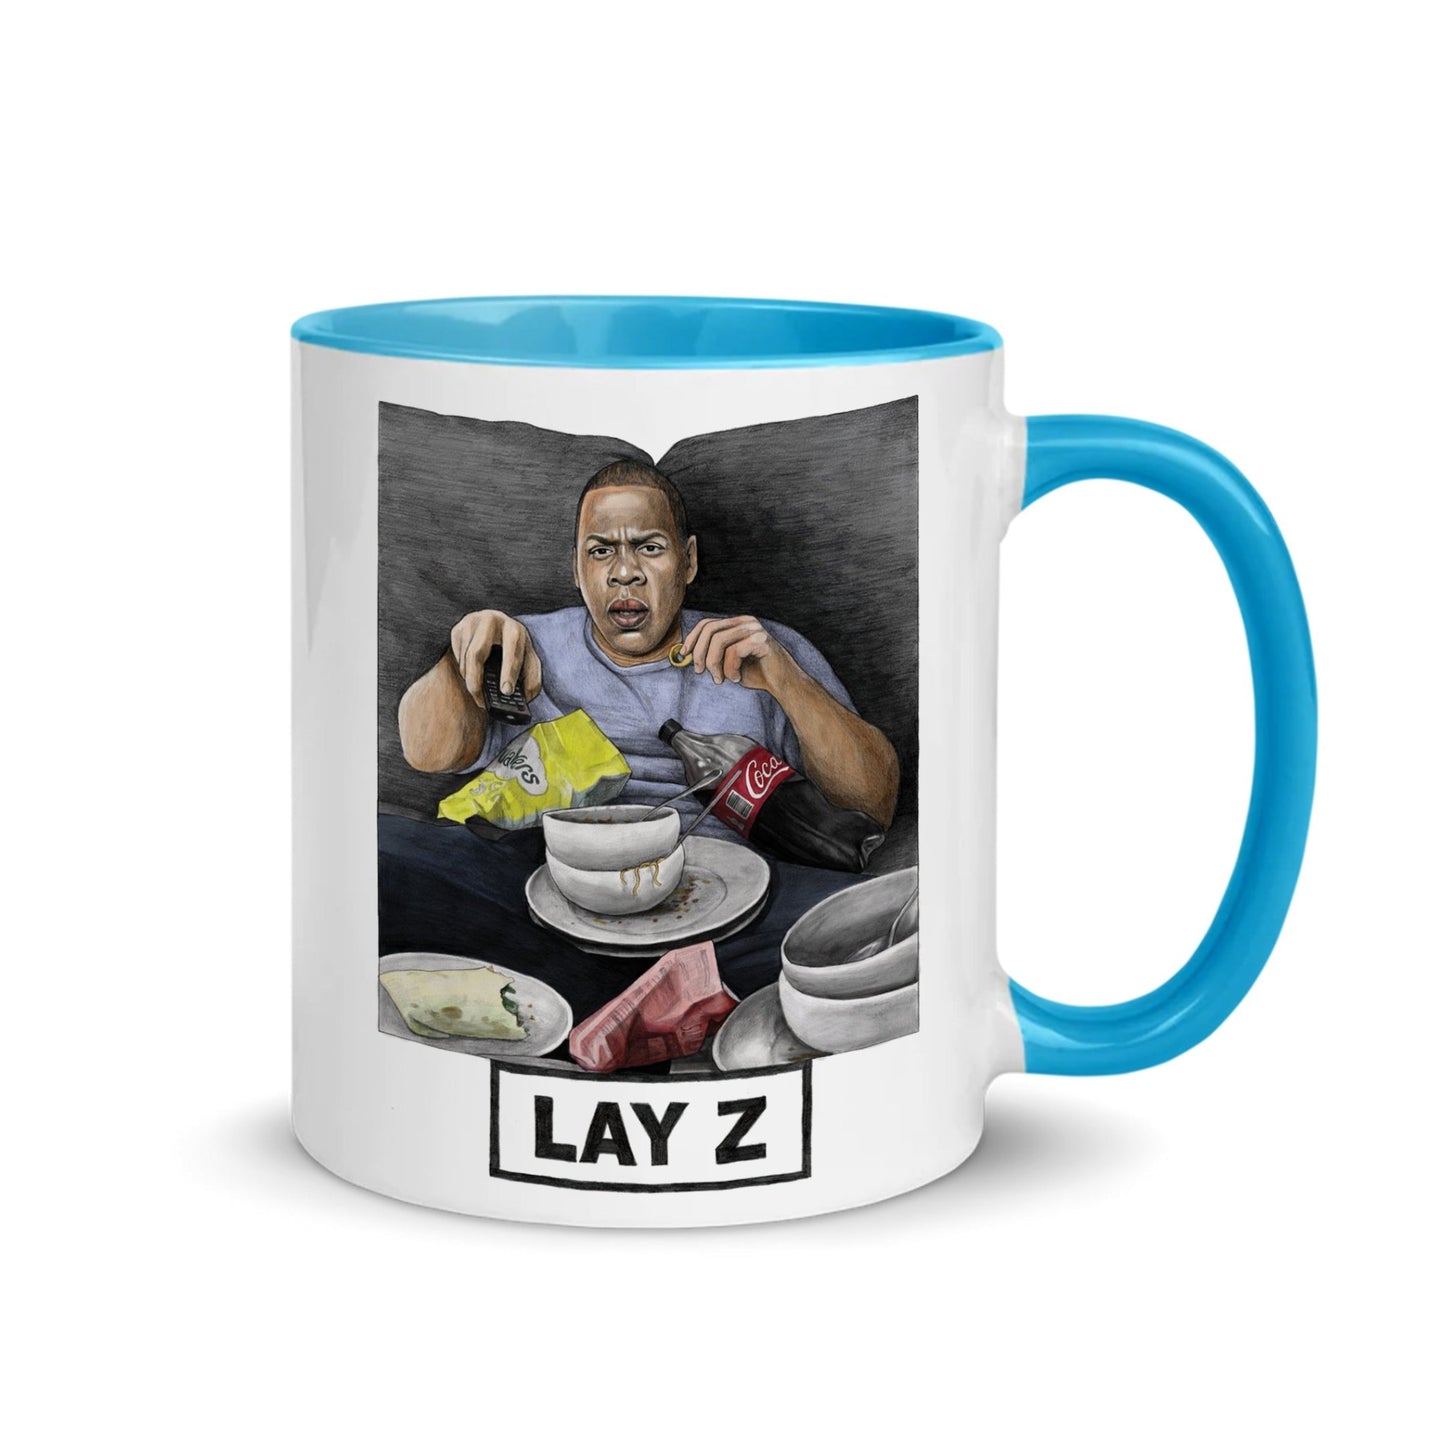 Lay Z Ceramic Mug - Quite Good Cards Funny Birthday Card